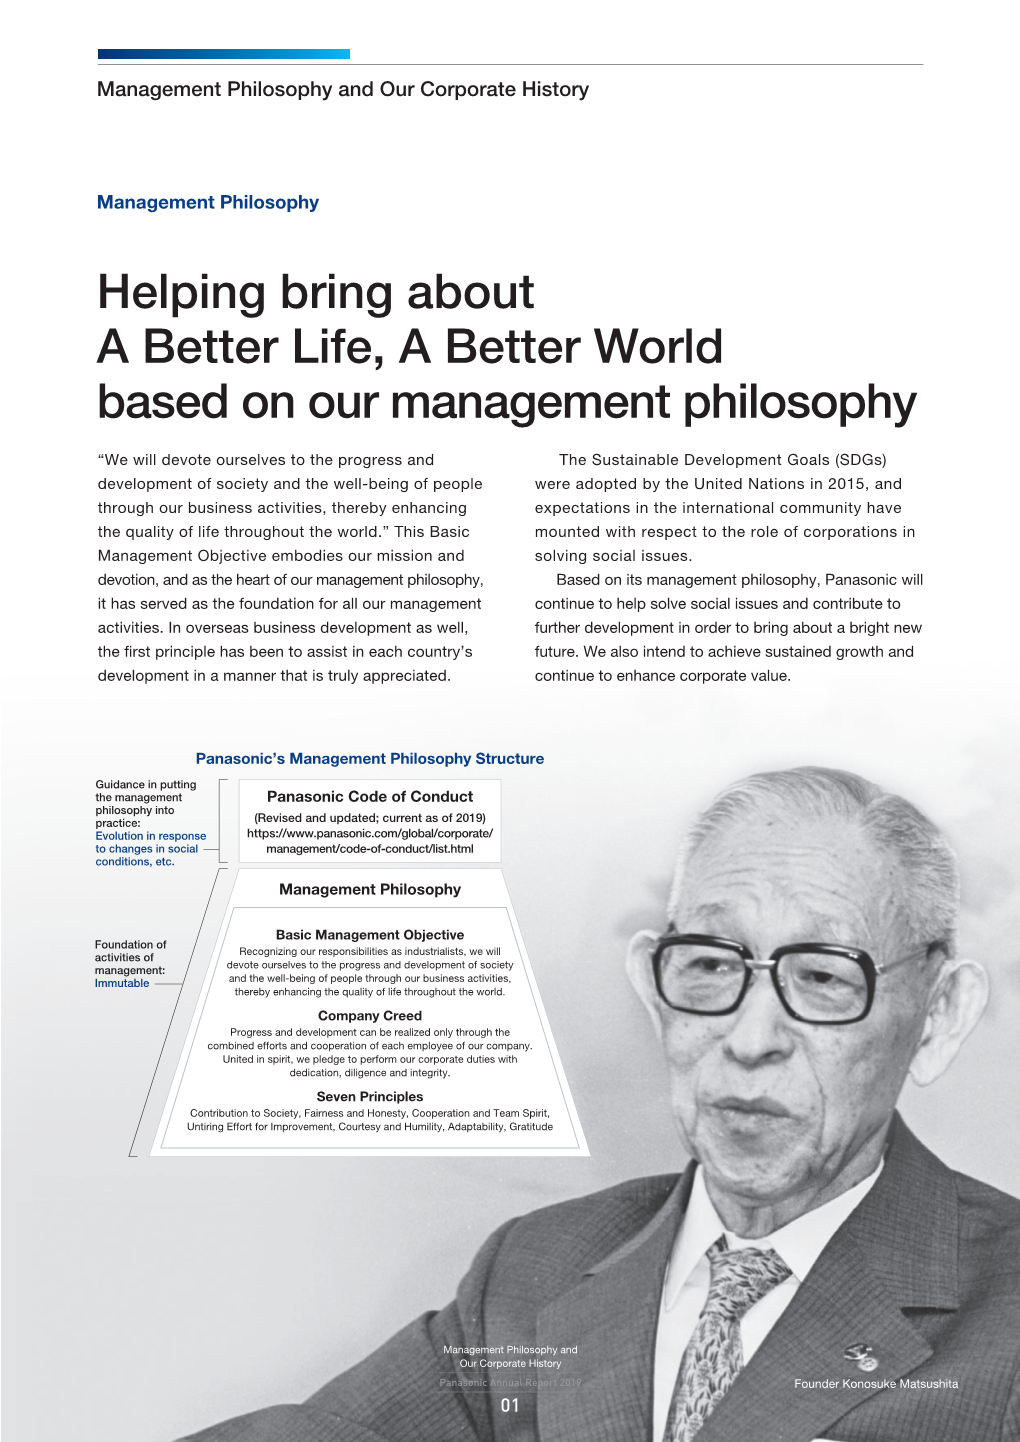 Annual Report 2019 Founder Konosuke Matsushita 01 Our Corporate History